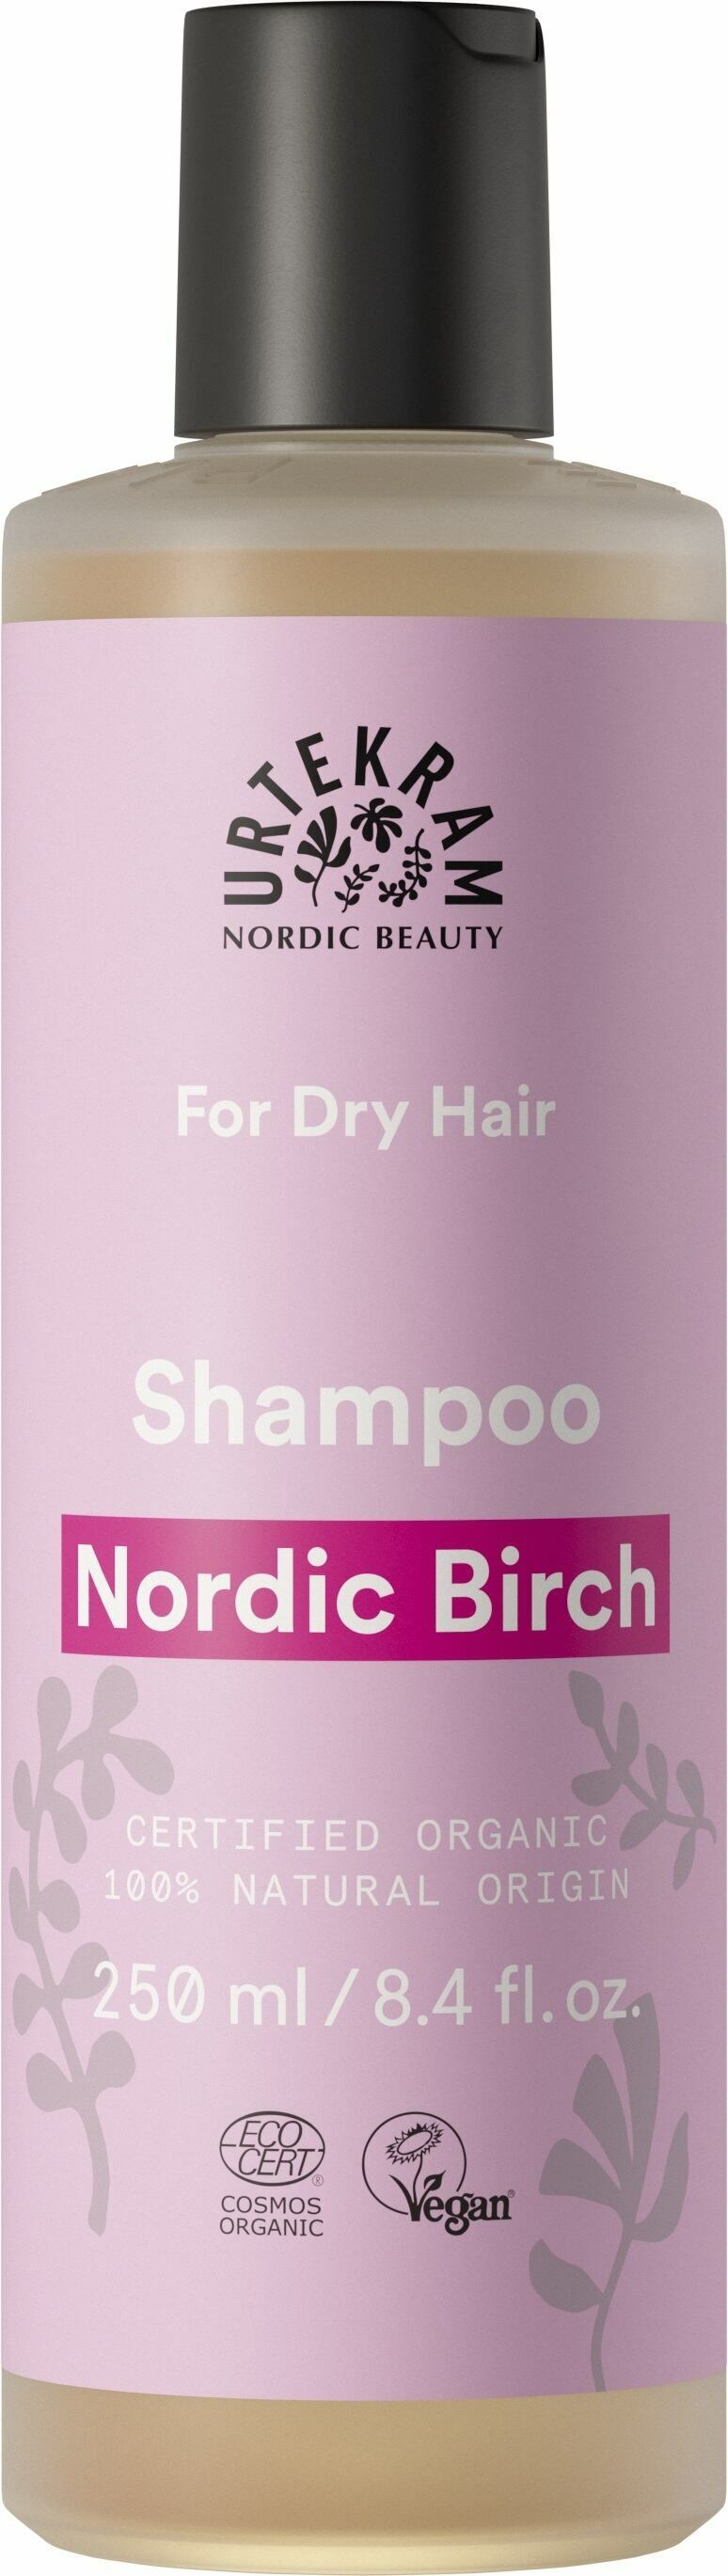 Urtekram Organic Nordic Birch Shampoo for Dry Hair 250ml